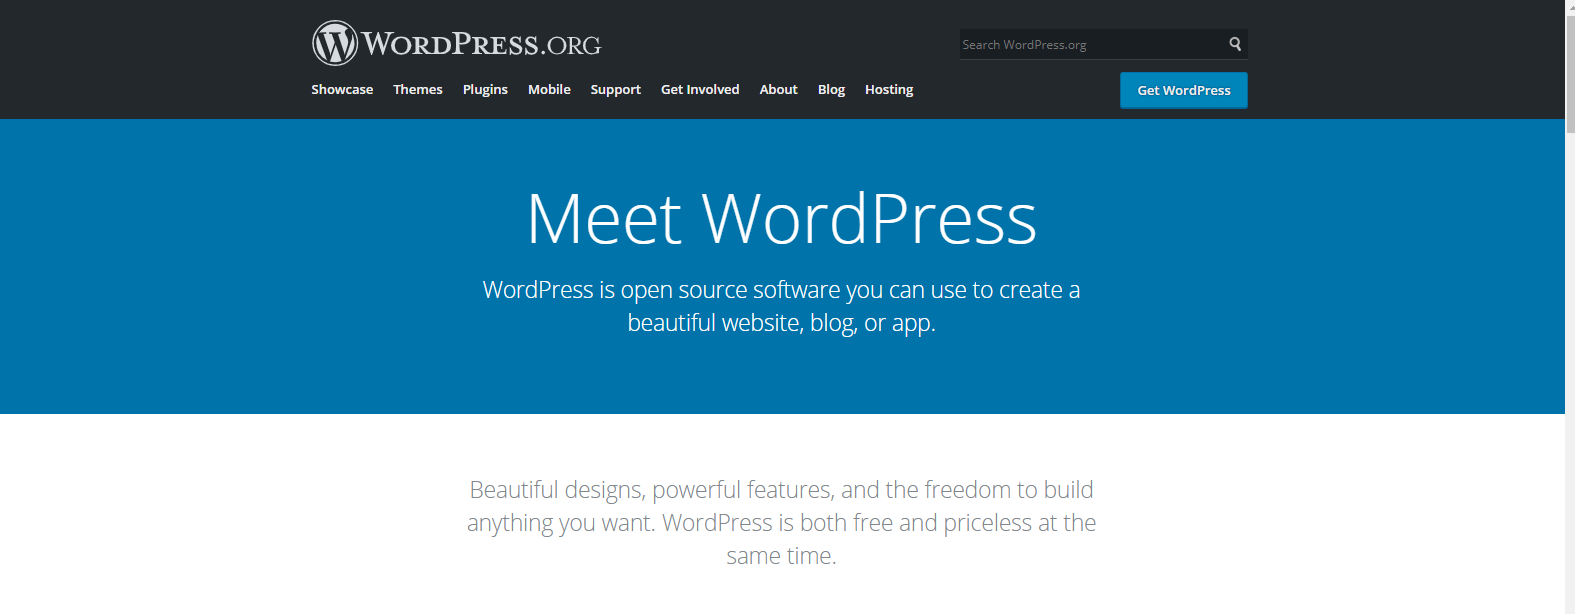 b=Wordpress home page